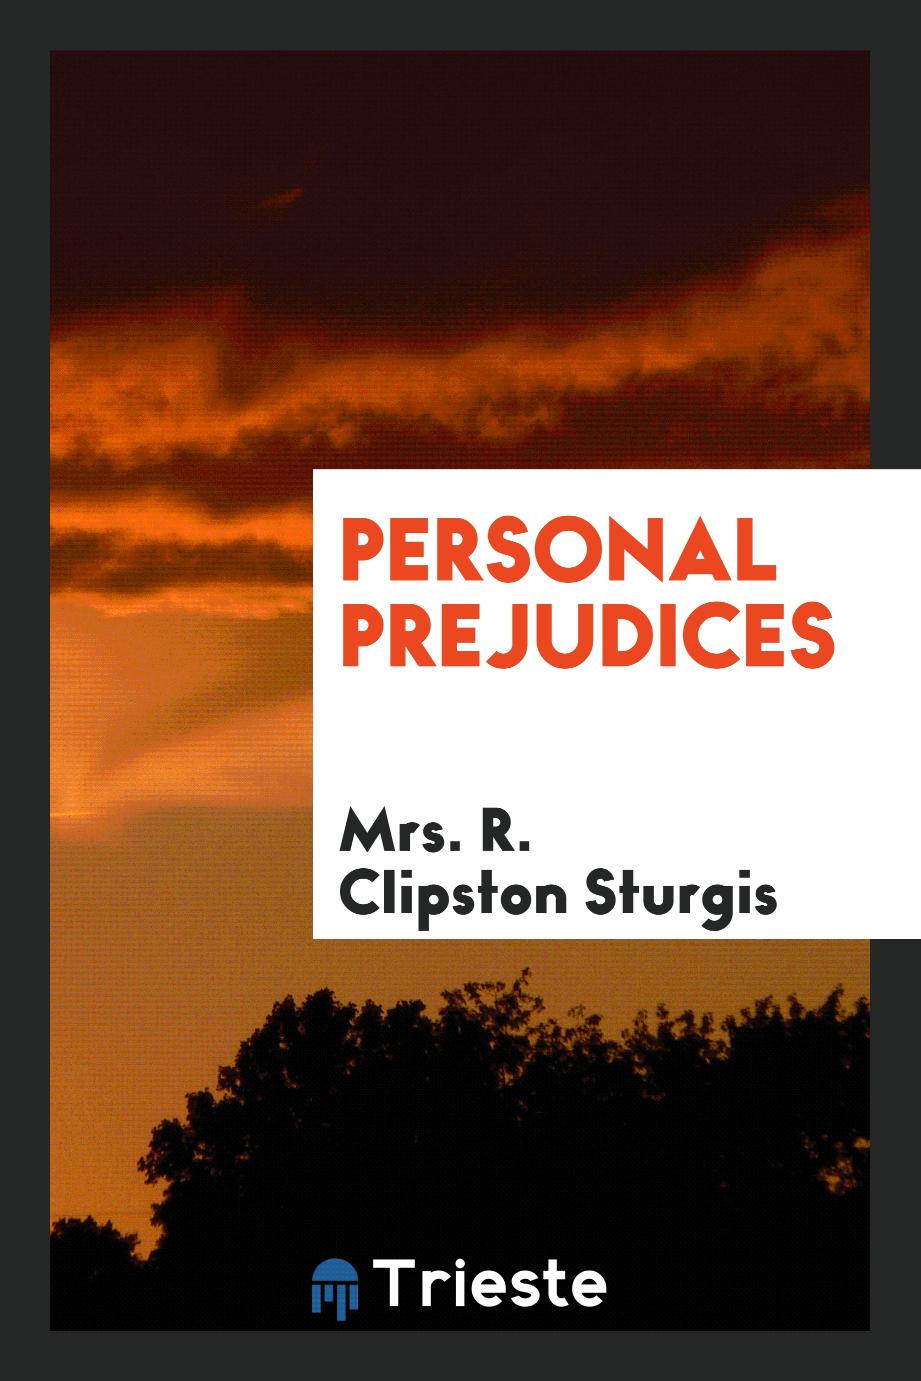 Personal prejudices